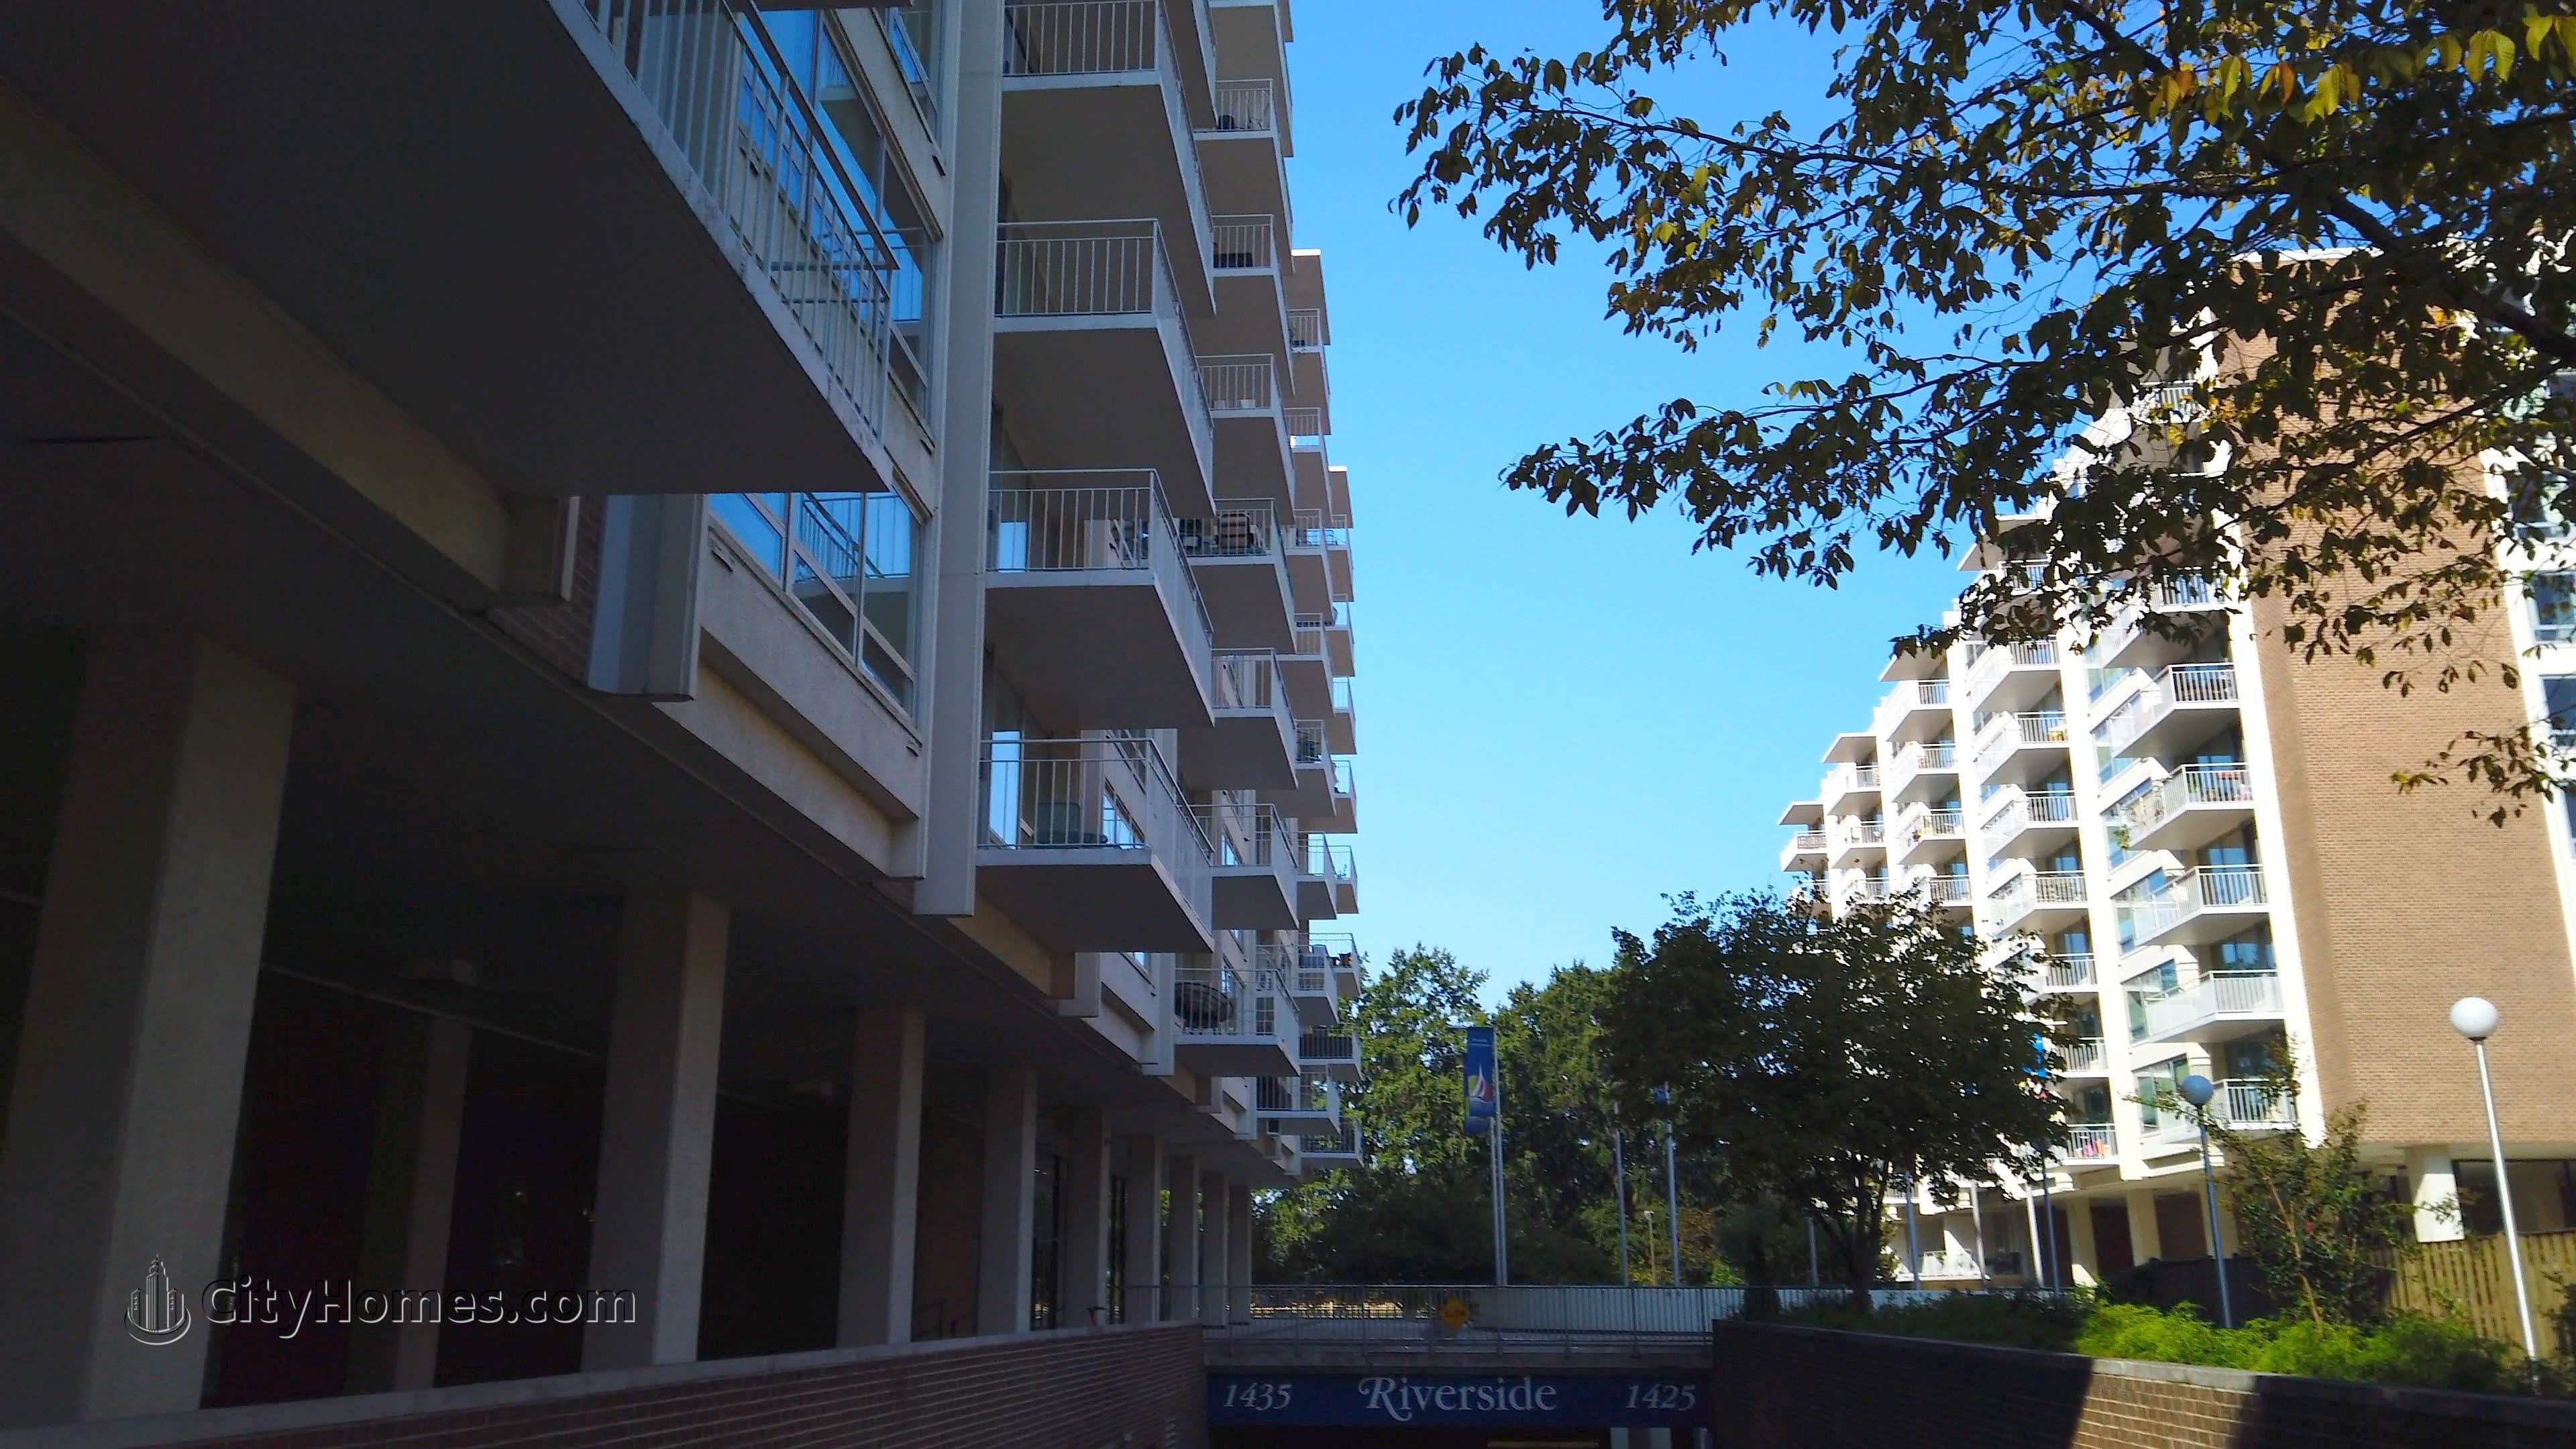 8. Riverside Condominiums gebouw op 1425 & 1435 4th St NW, Southwest / Waterfront, Washington, DC 20024